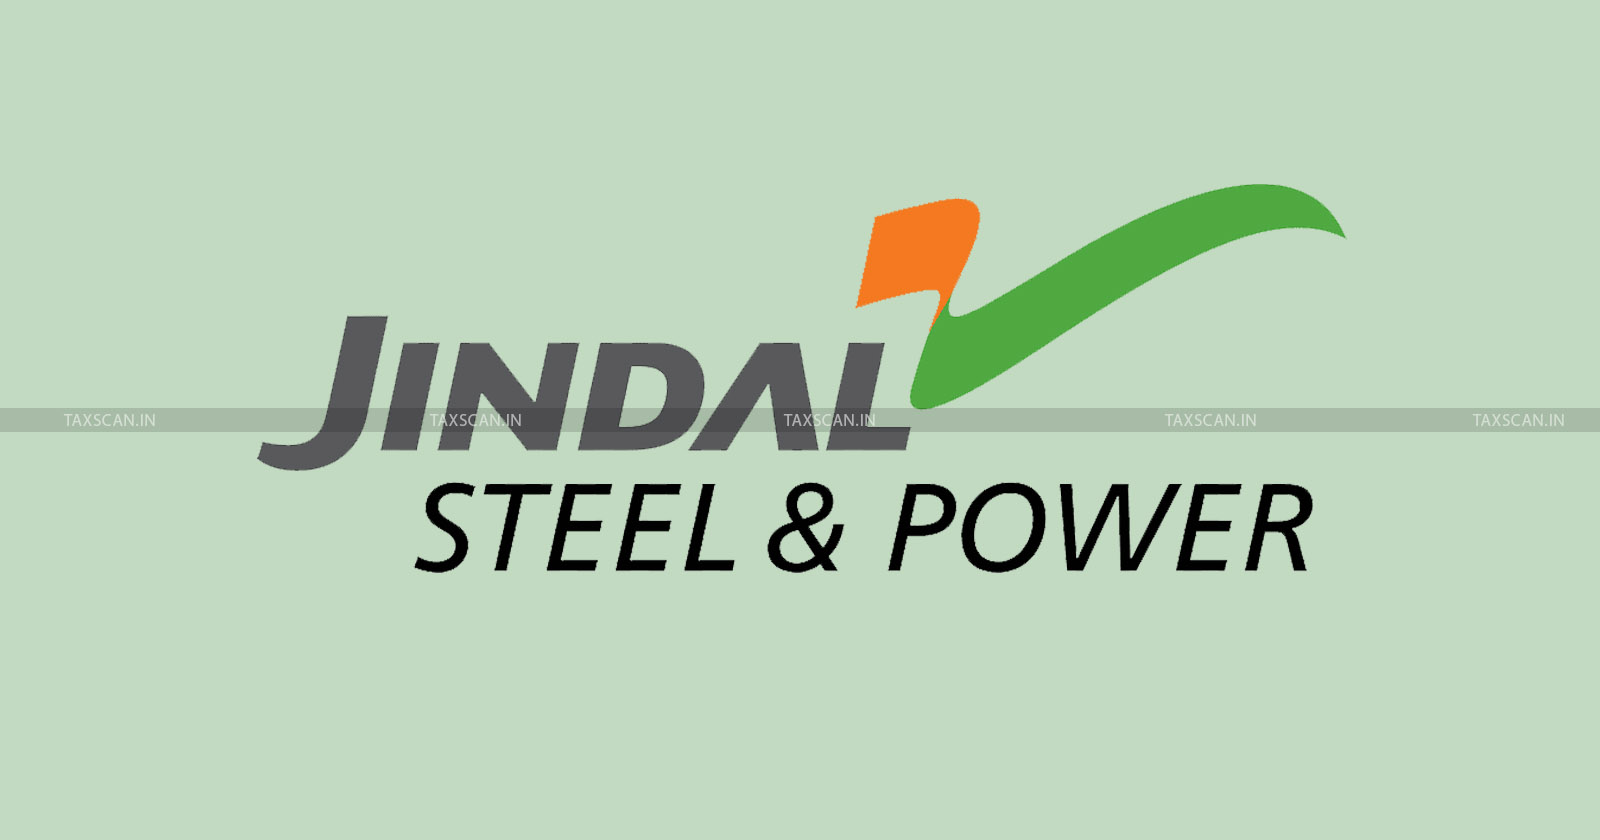 Relief to Jindal Steel - Supreme Court dismisses Revenue Appeal - upholds computation of Market Value of Electricity for Deduction - TAXSCAN